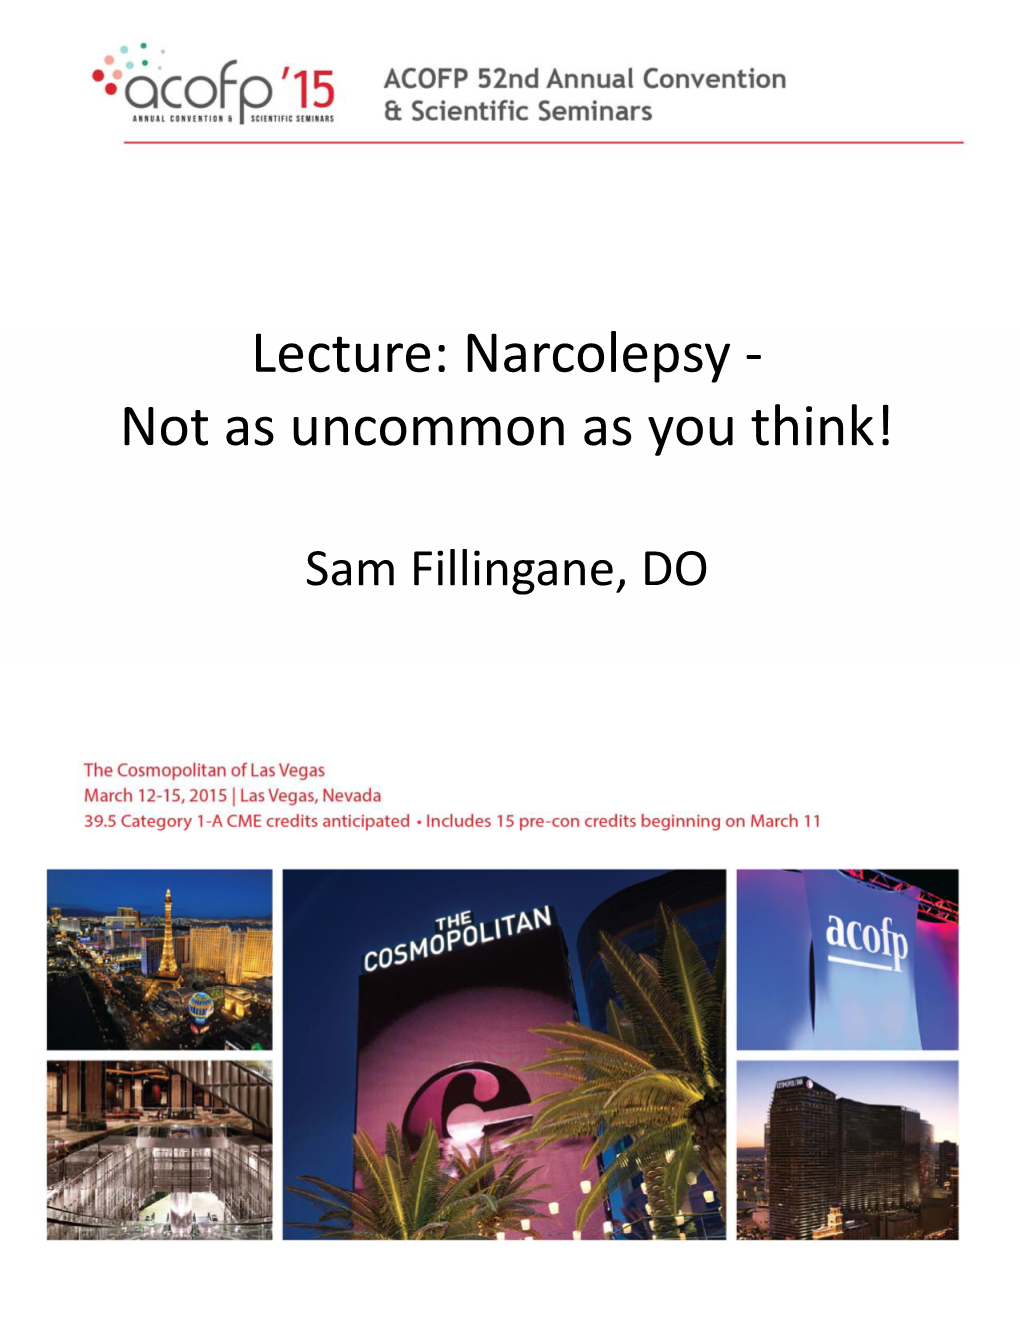 Narcolepsy More Common Than You Think! Sam Fillingane, D.O